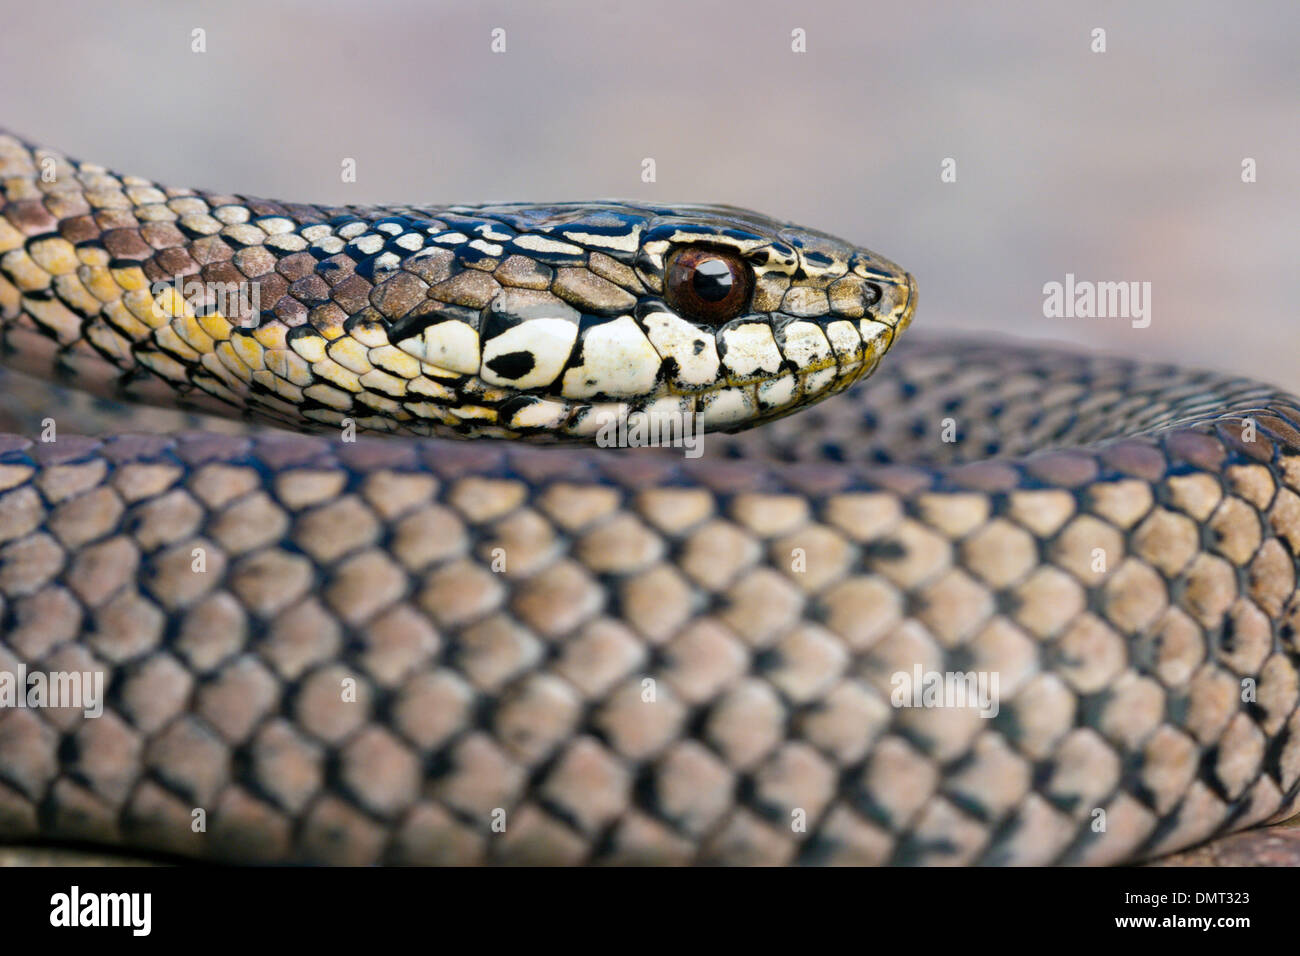 snake poisonous venomous culebra con cola larga Chile Stock Photo